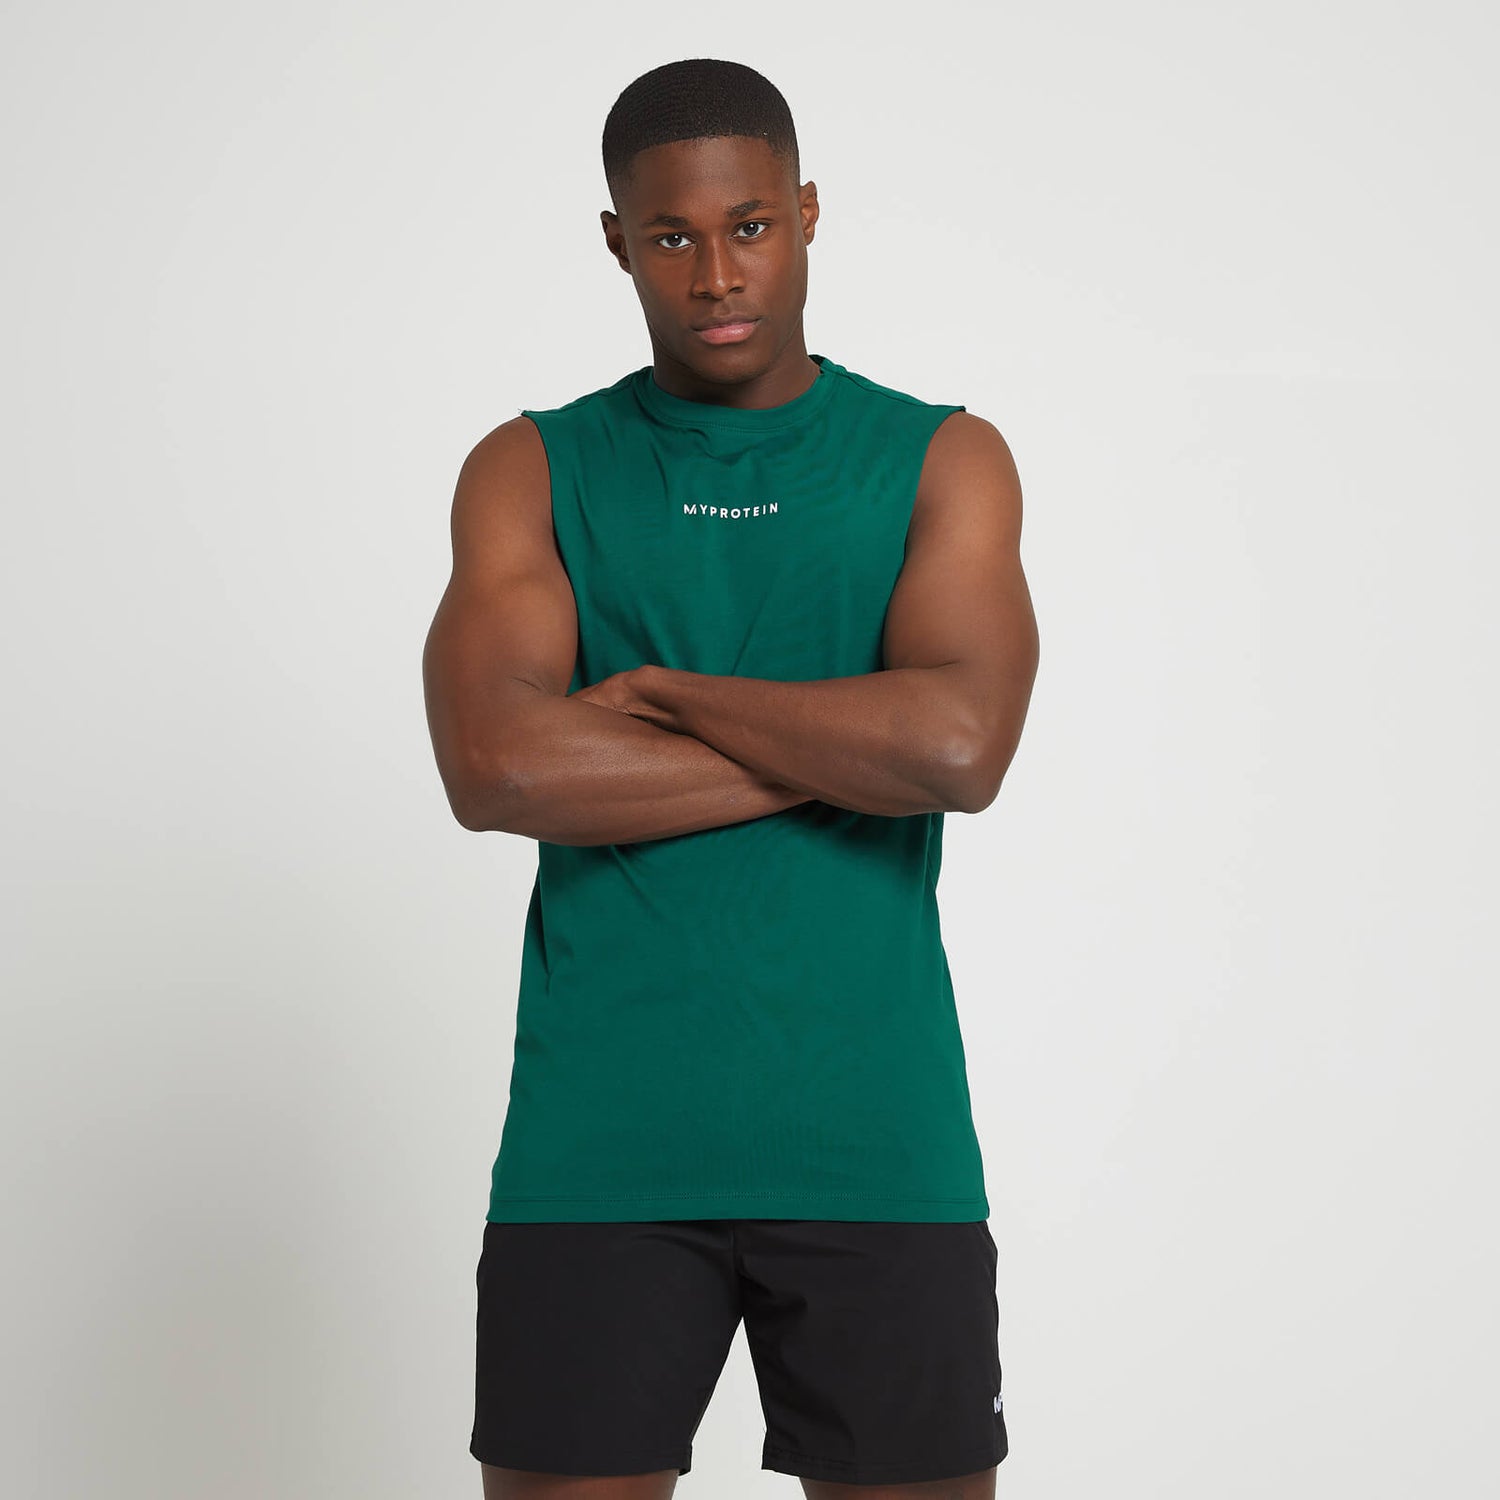 Camiseta sin mangas con sisas caídas Originals para hombre de MP - Verde pino - XL